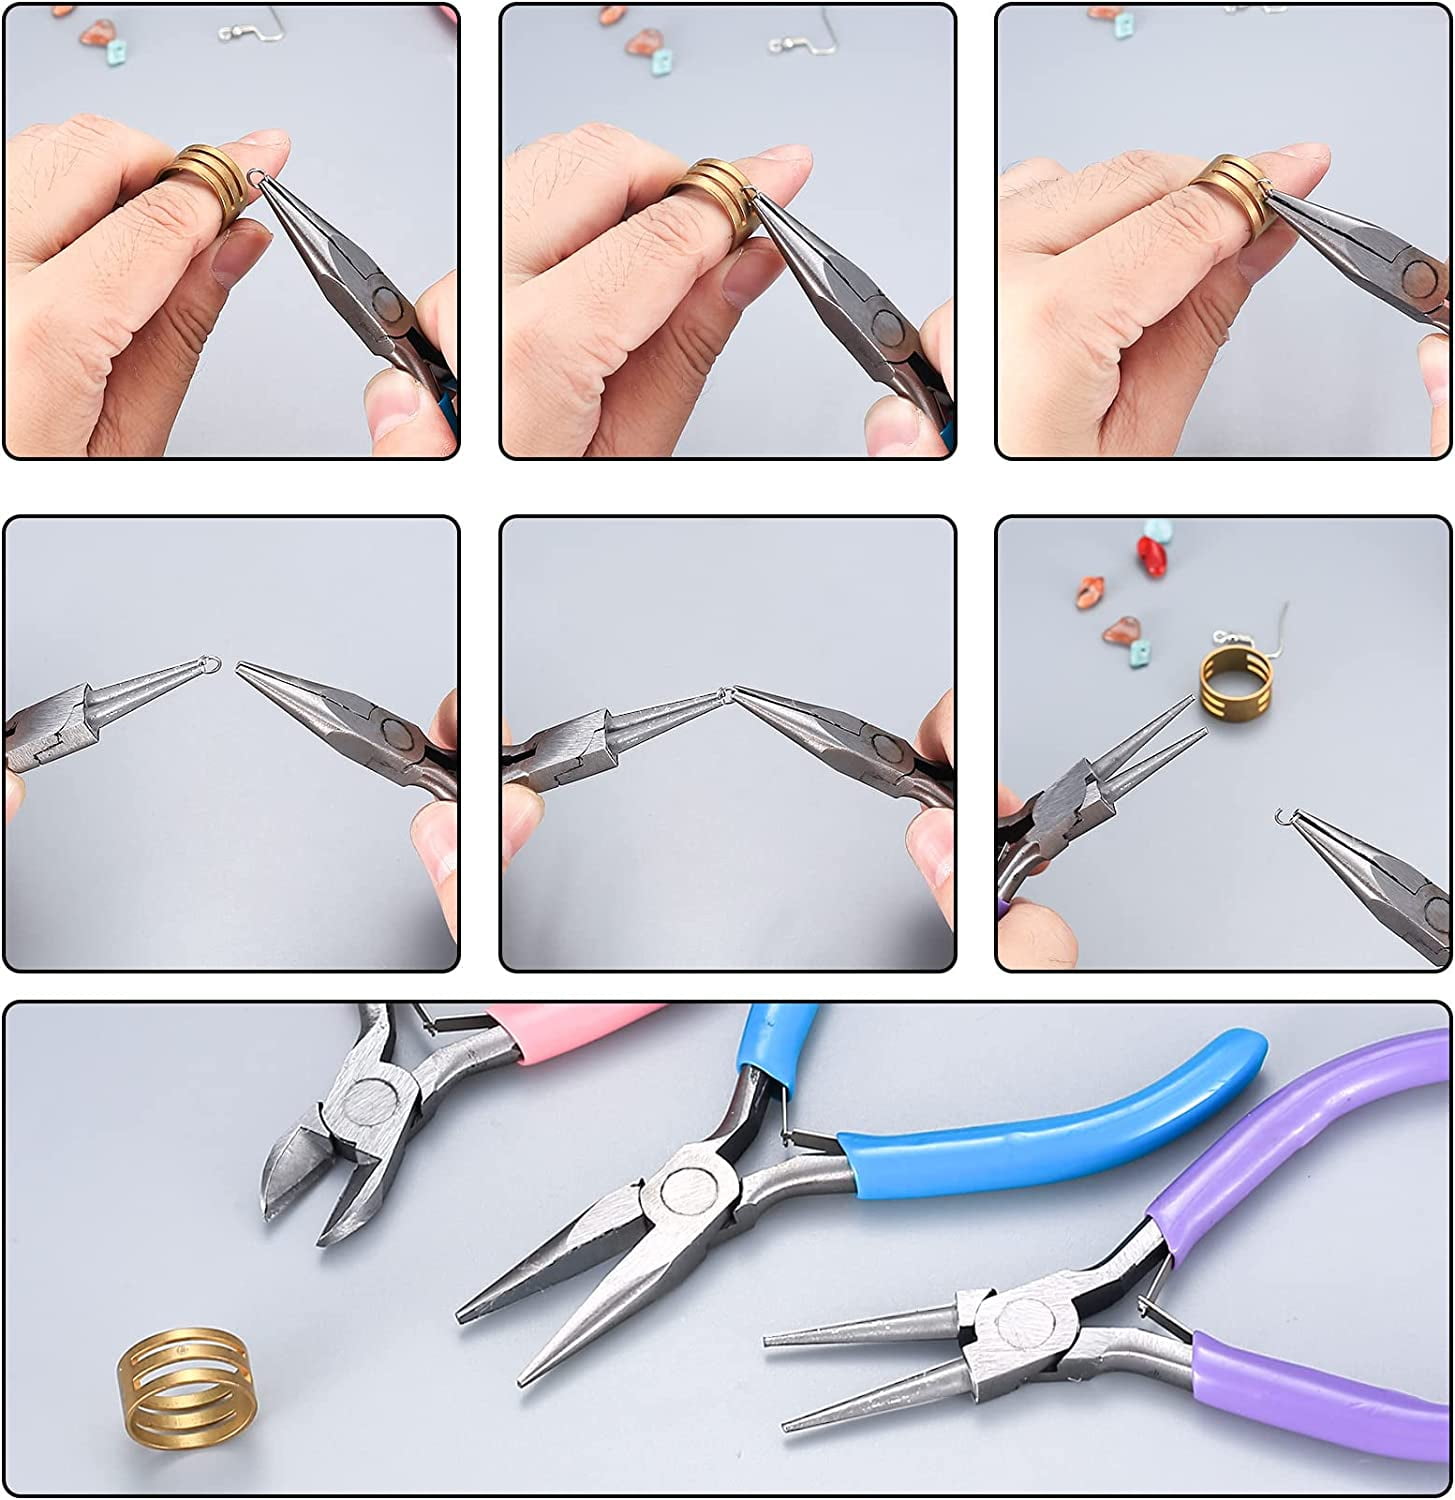 Odomy 3pcs Mini Pliers, Jewelry Pliers Set, Diagonal Pliers & Needle-Nose Pliers & Round Nose Pliers, Jewelry Repair Tool, Pliers Set for Hobby DIY